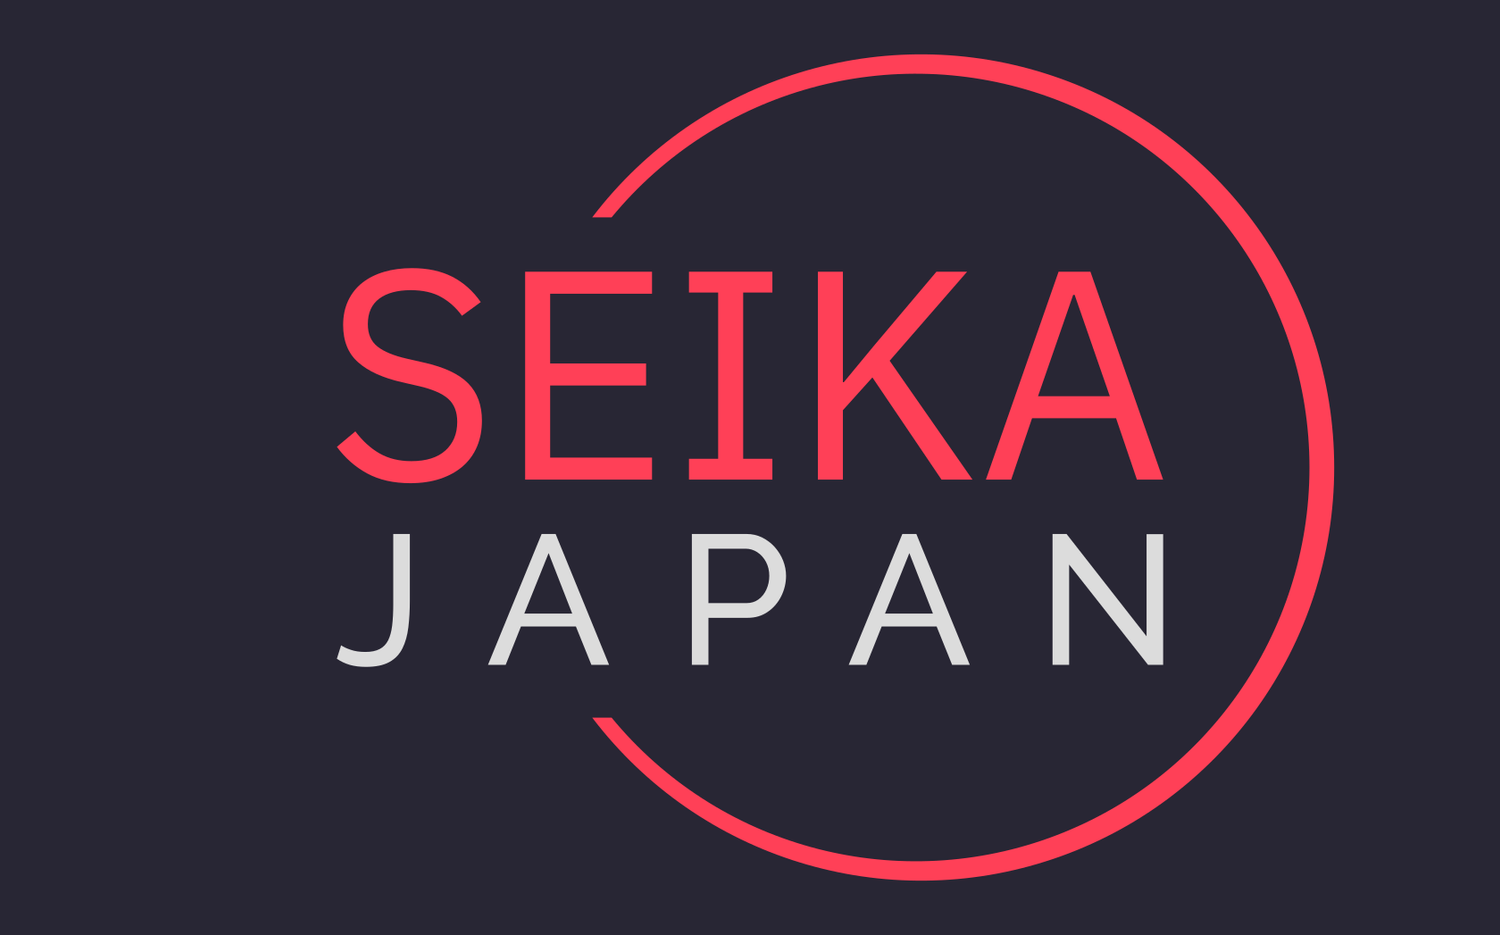 SEIKA JAPAN Shop